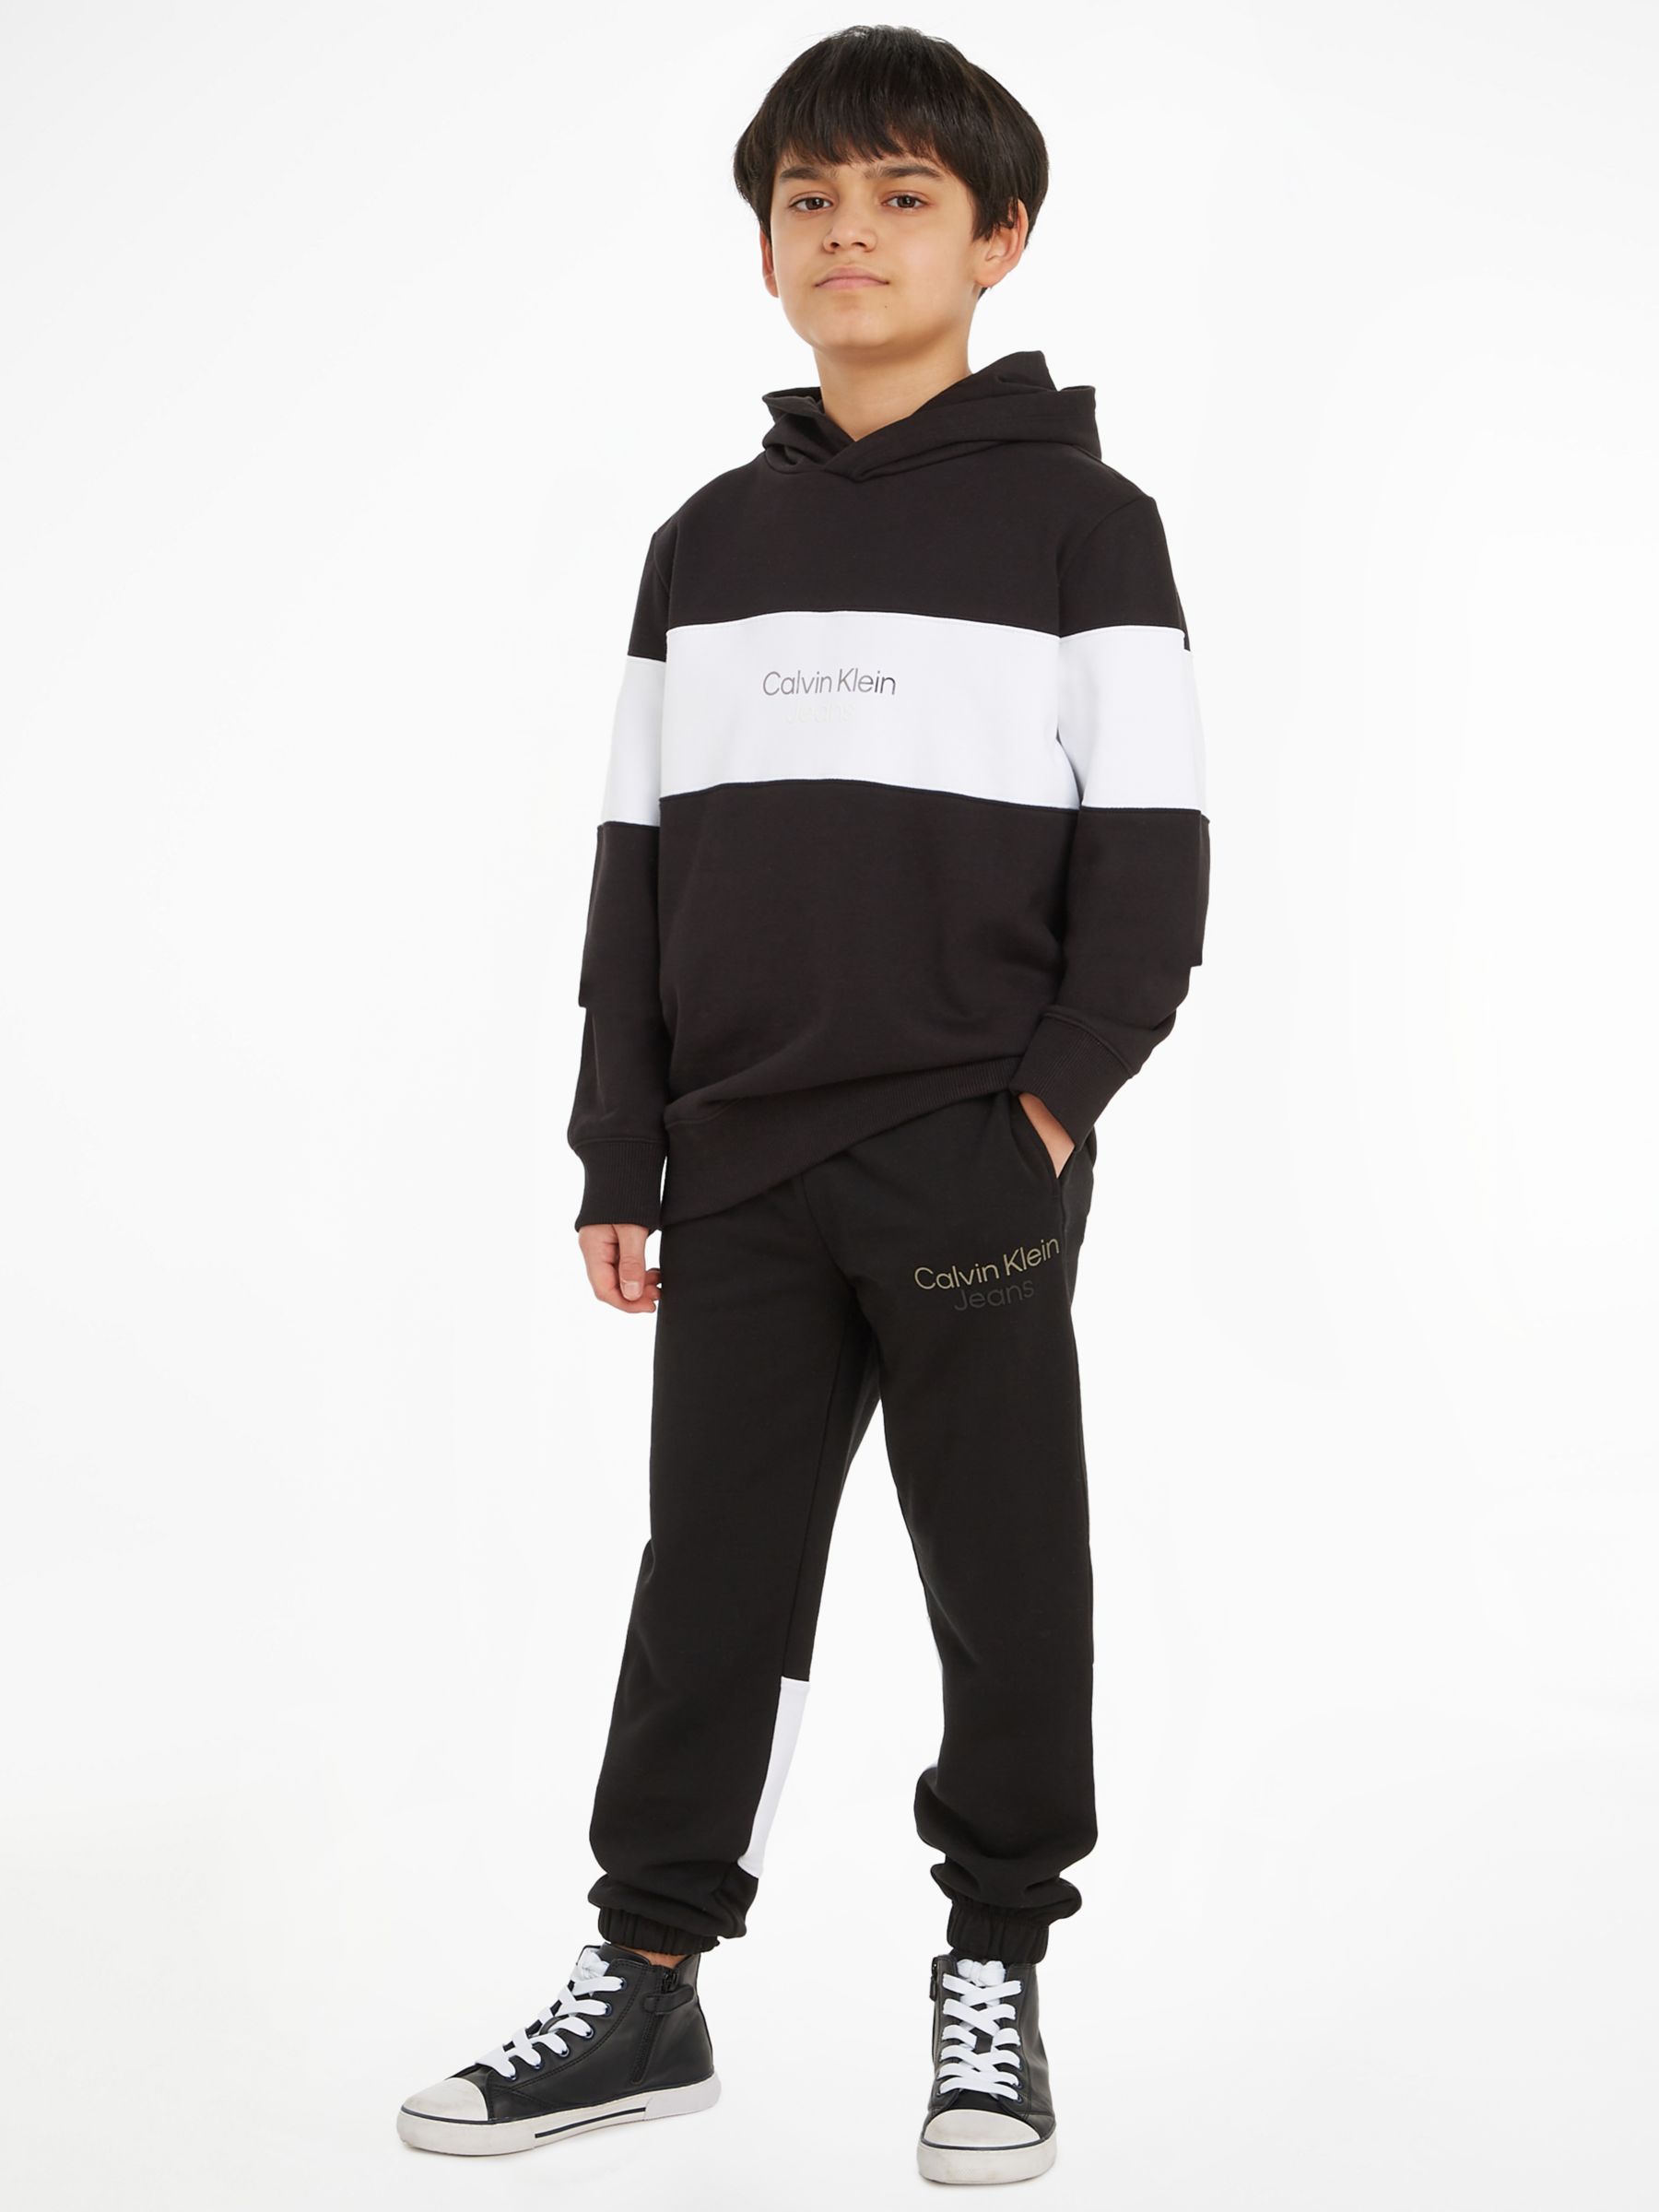 Calvin Klein Boys Colour Block Hoodie Sweatpants Set - Kids Life